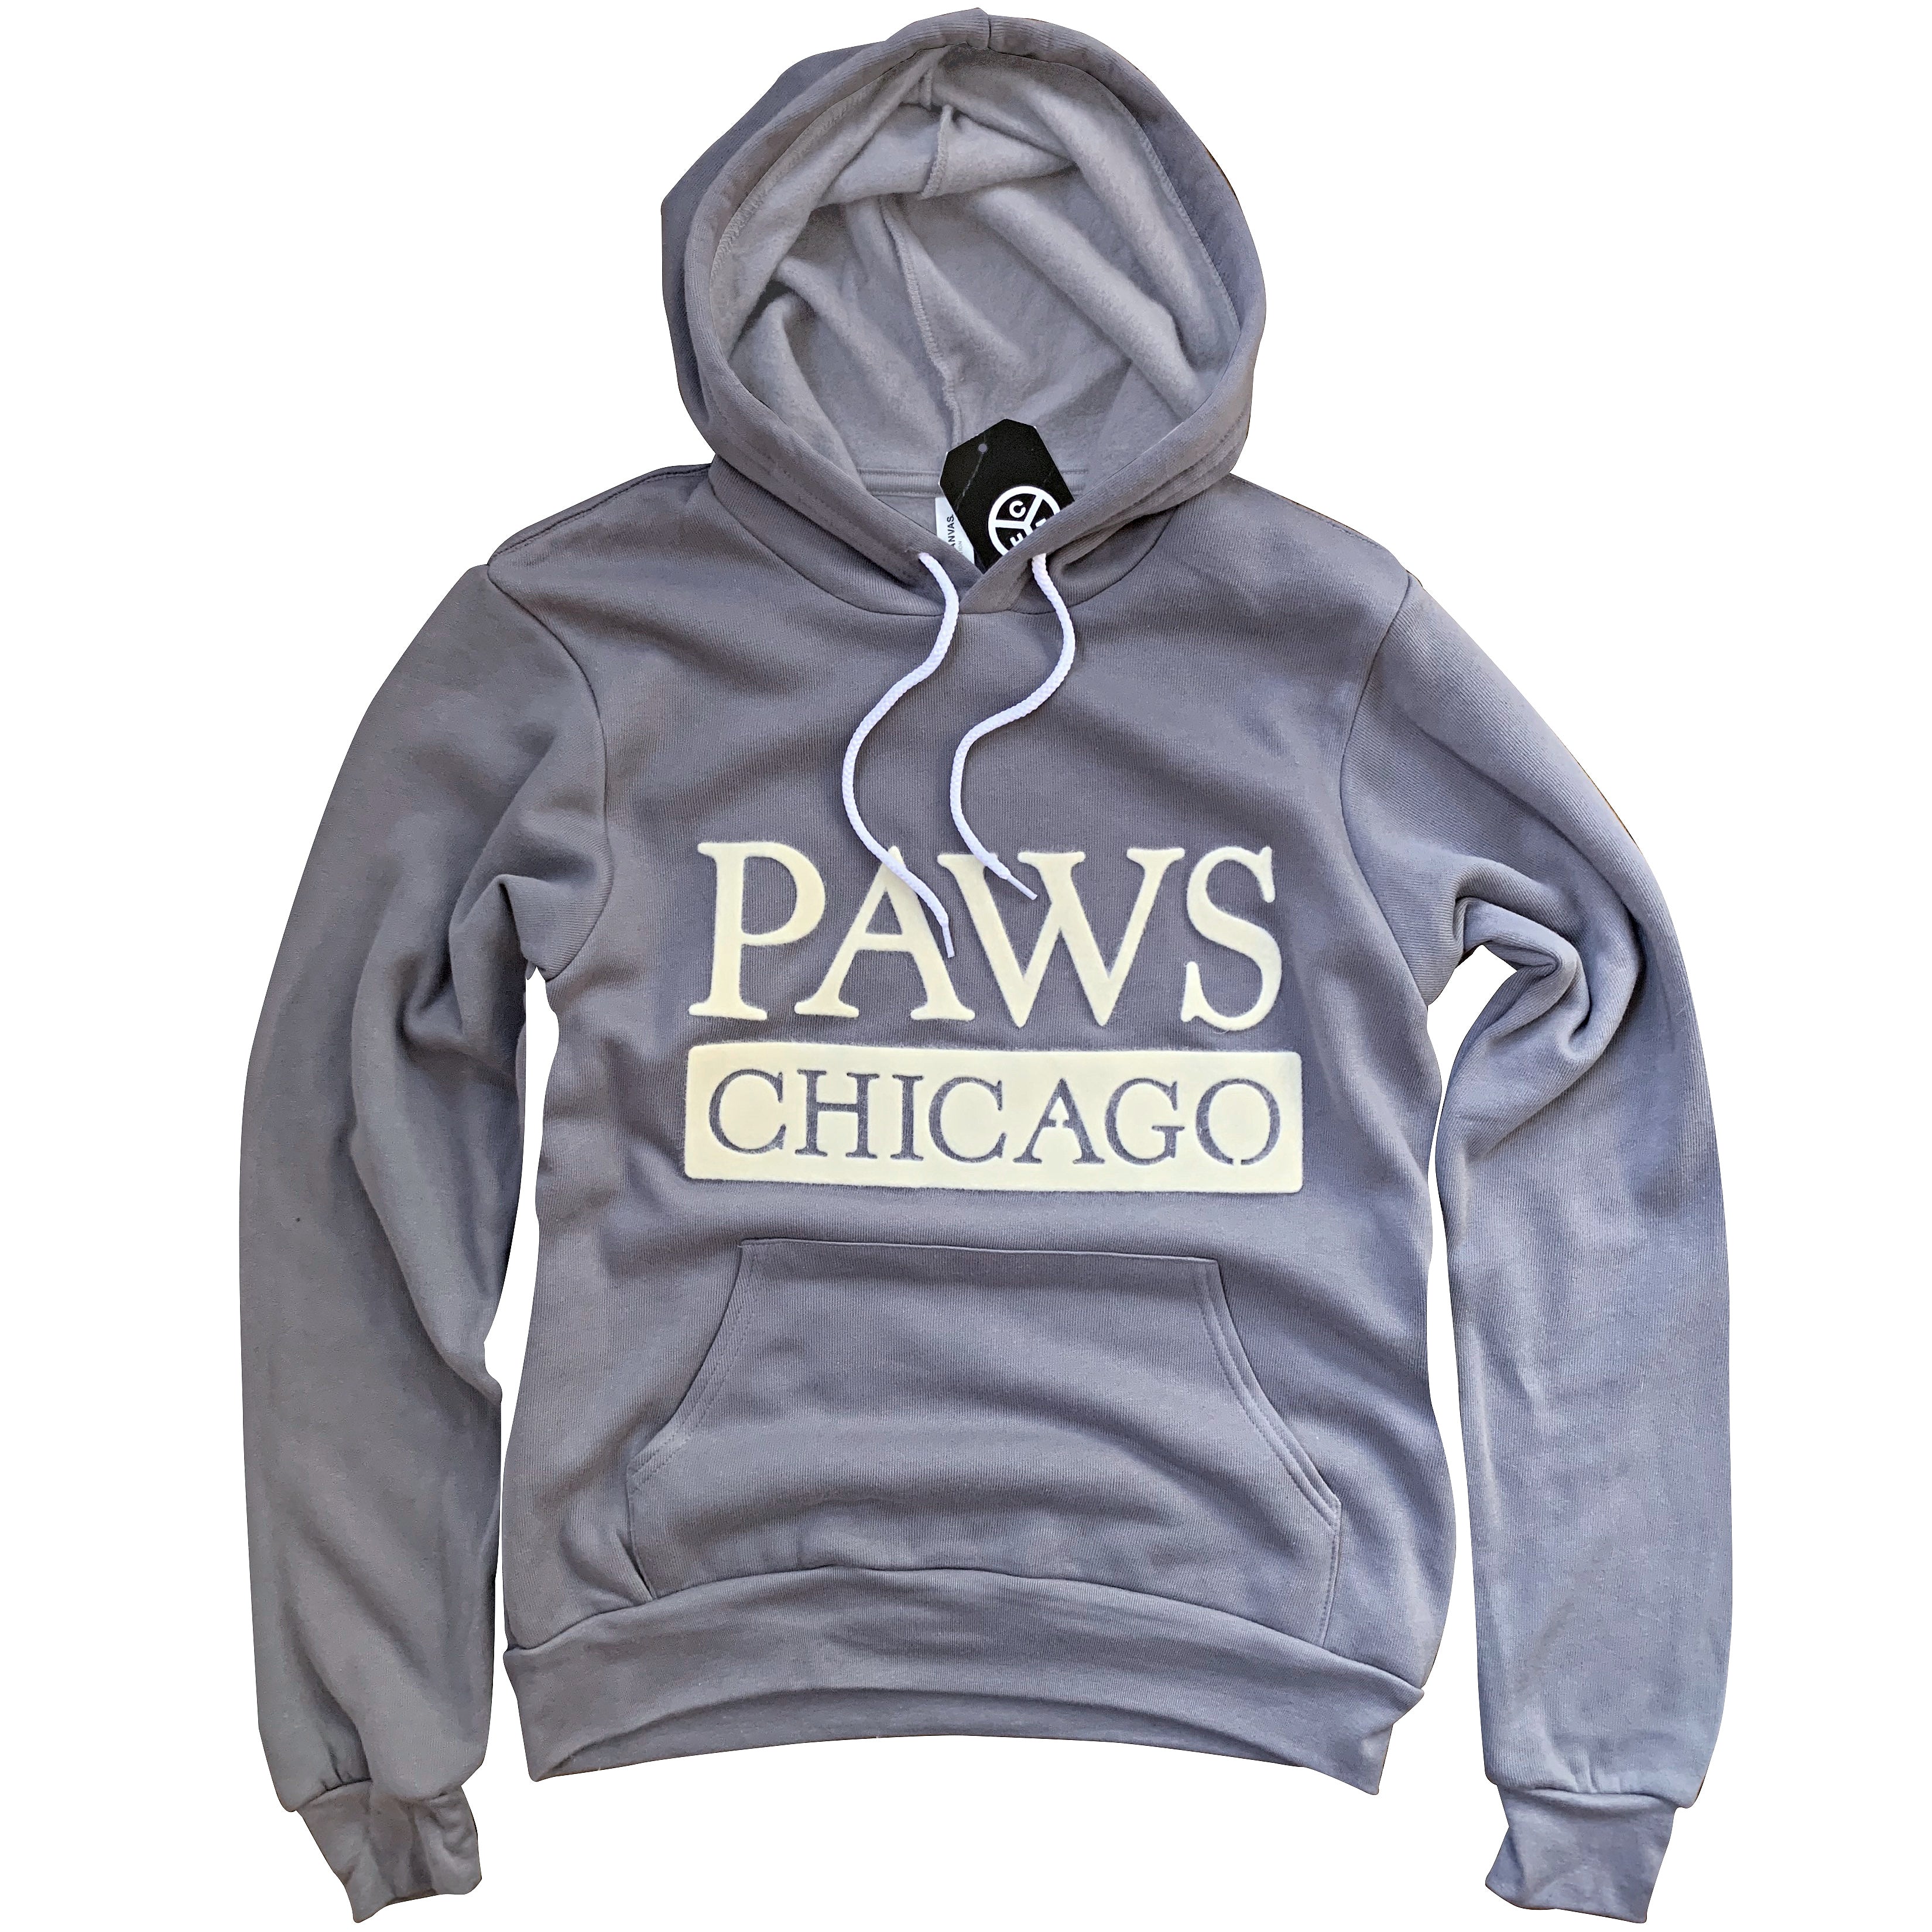 Paws Chicago Hoodie Sweatshirt